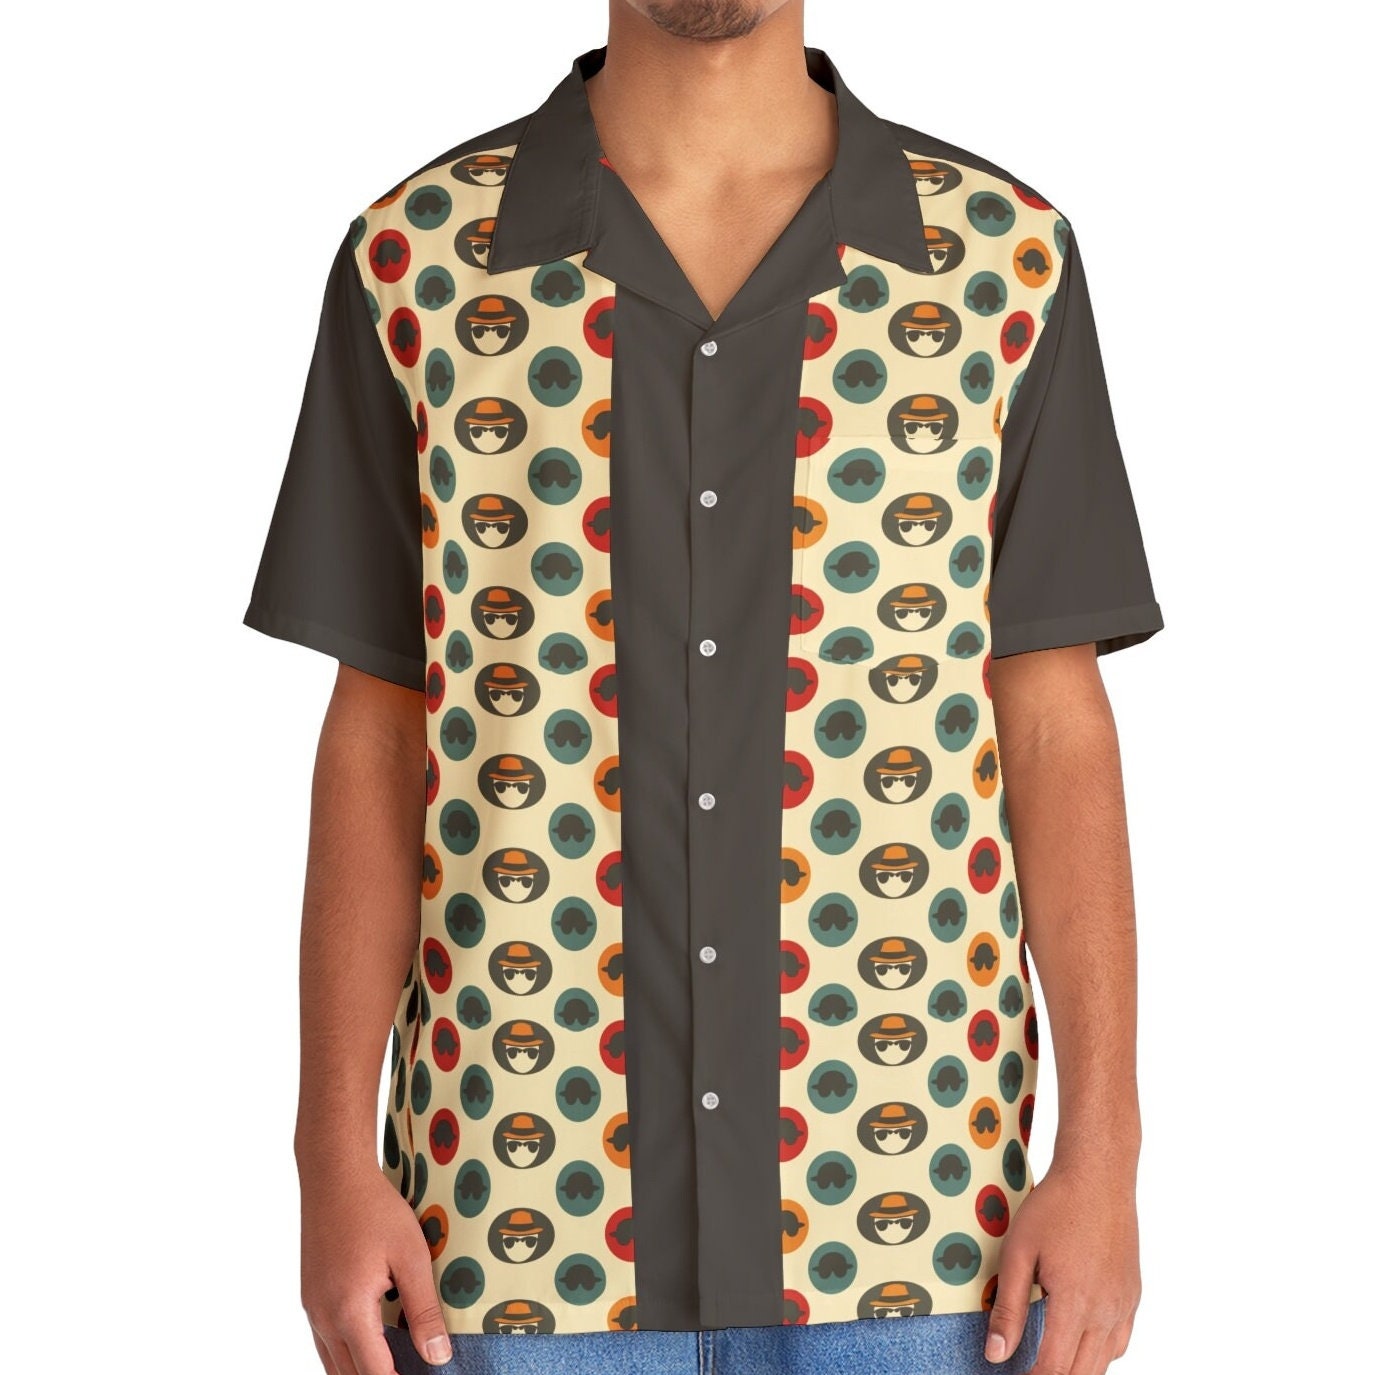 Spies Retro Vintage-inspired Hawaiian Shirt, 1950s/60s style